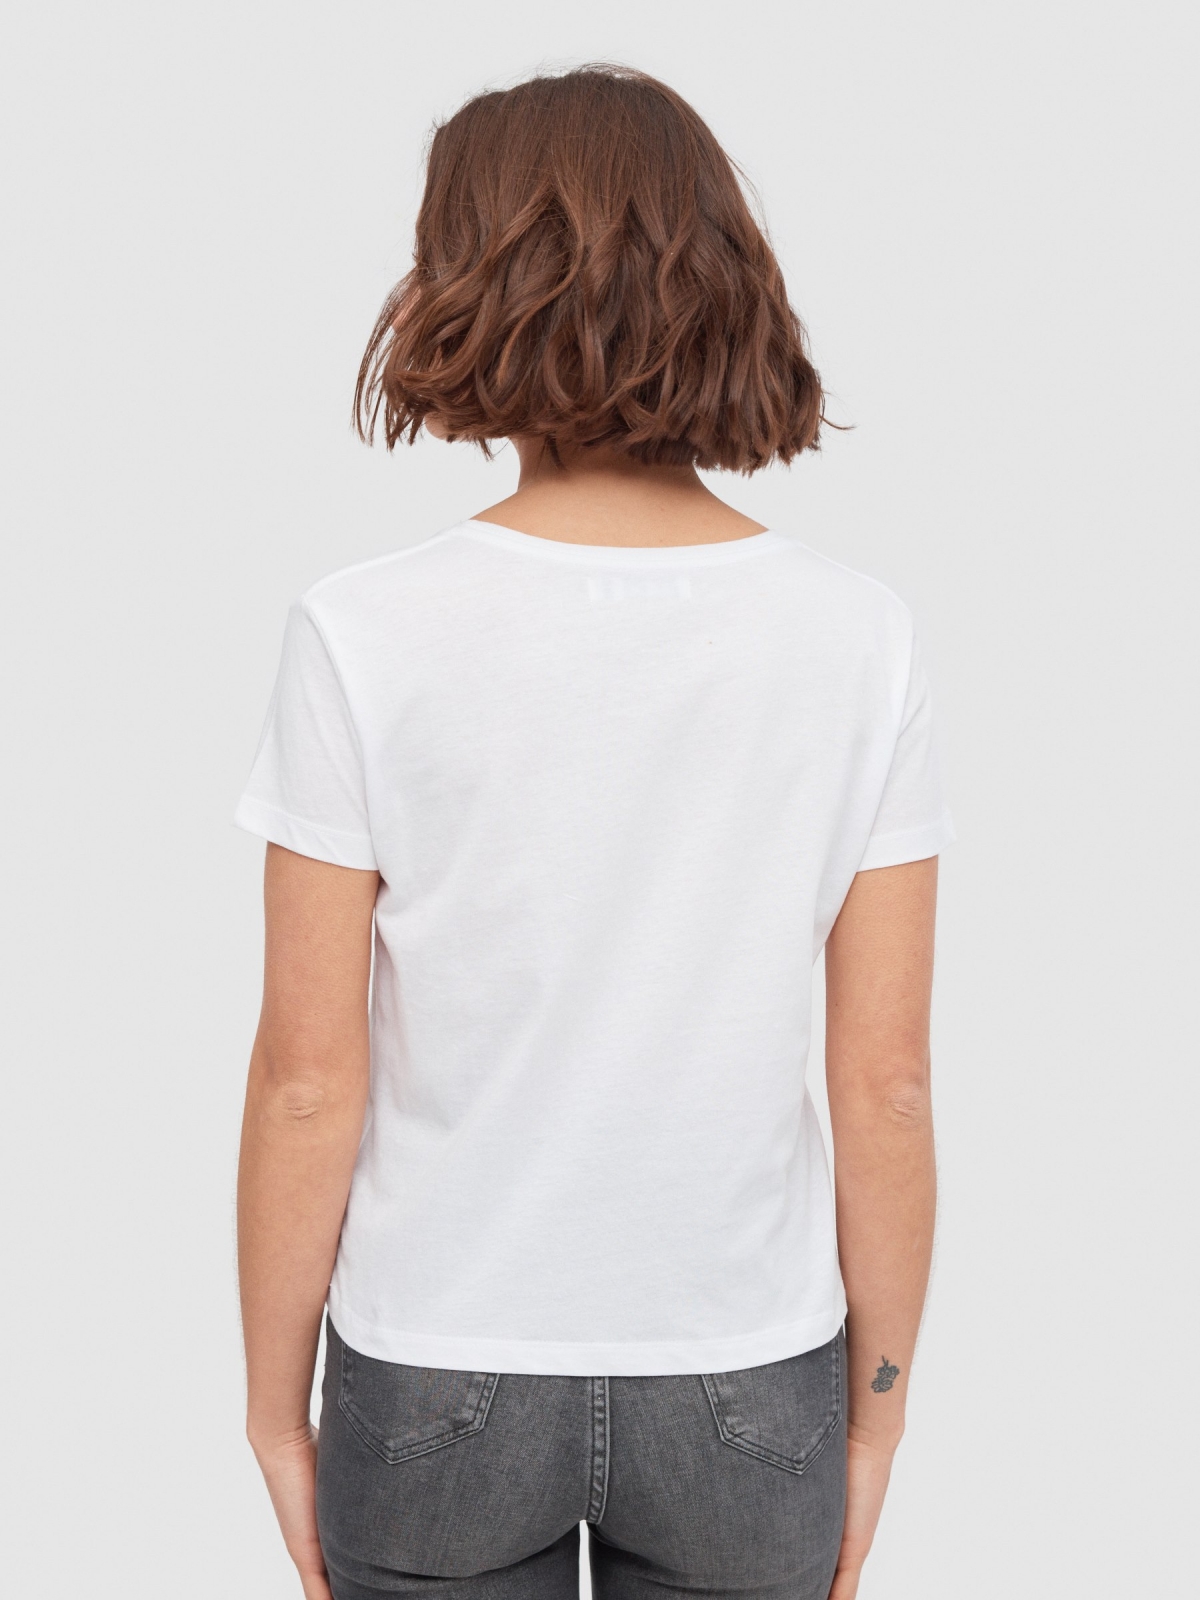 Camiseta estampado Kawaii blanco vista media trasera